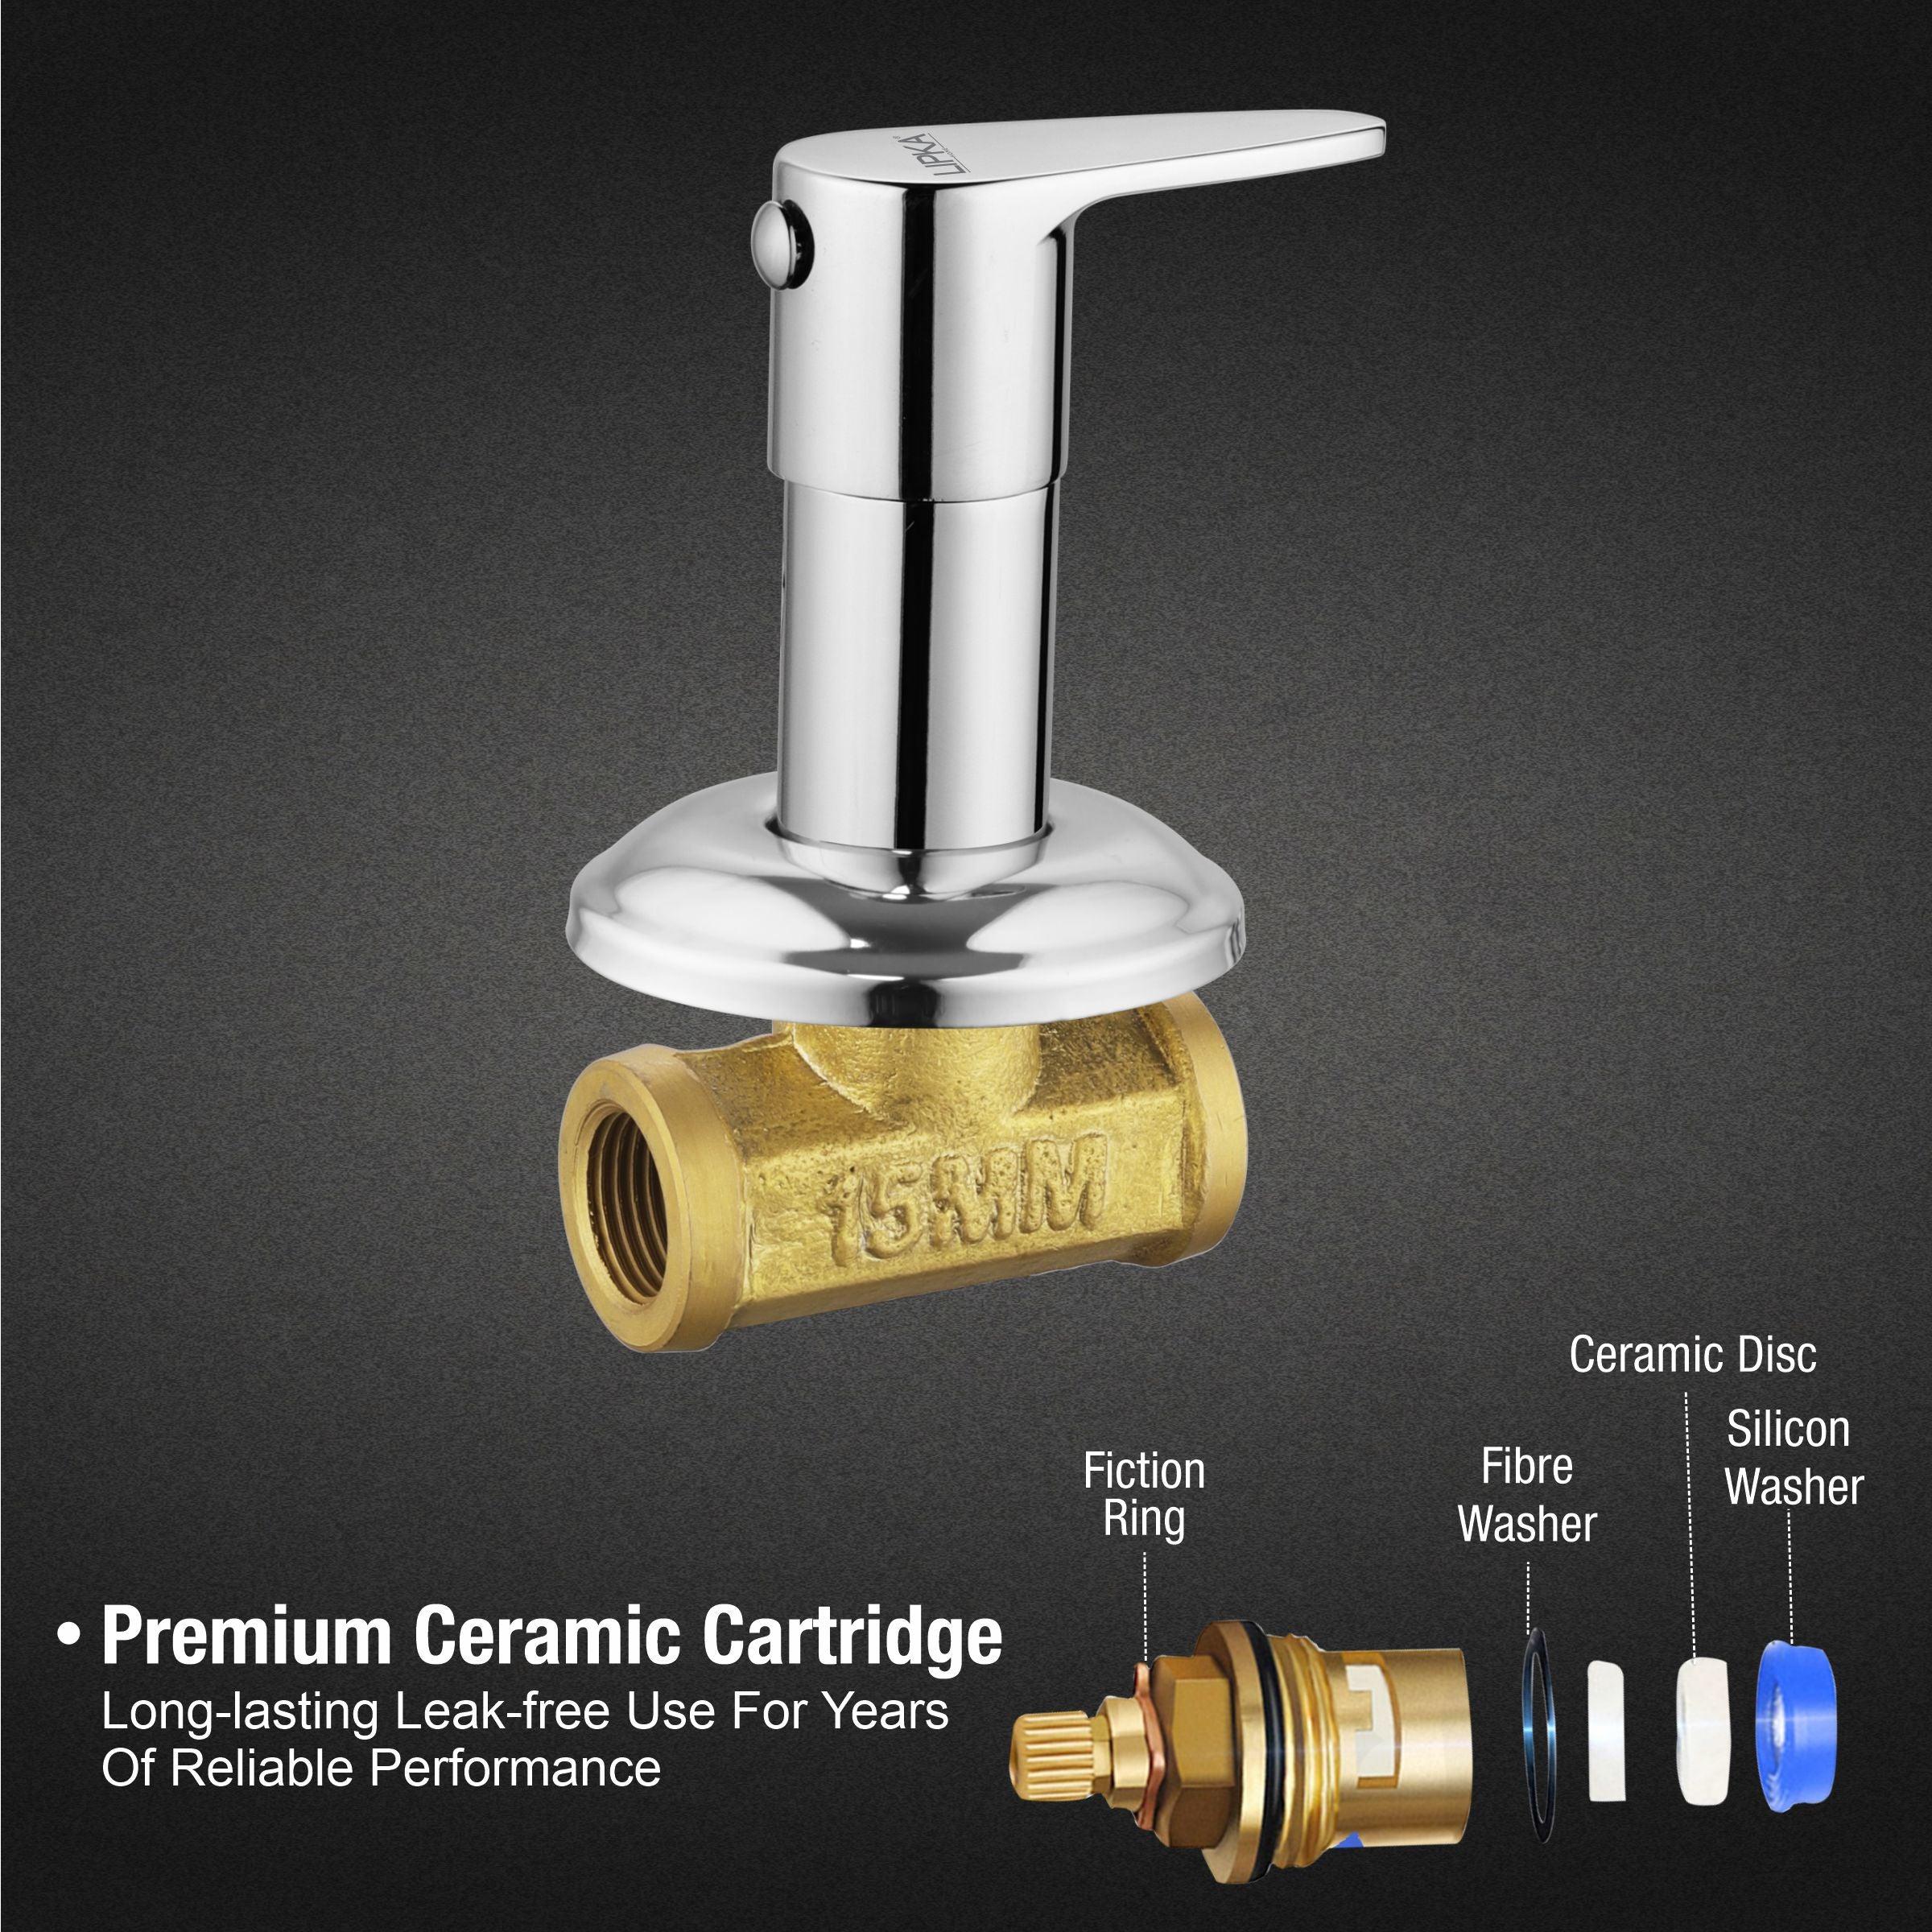 Lava Concealed Stop Valve (15mm) Brass Faucet - LIPKA - Lipka Home